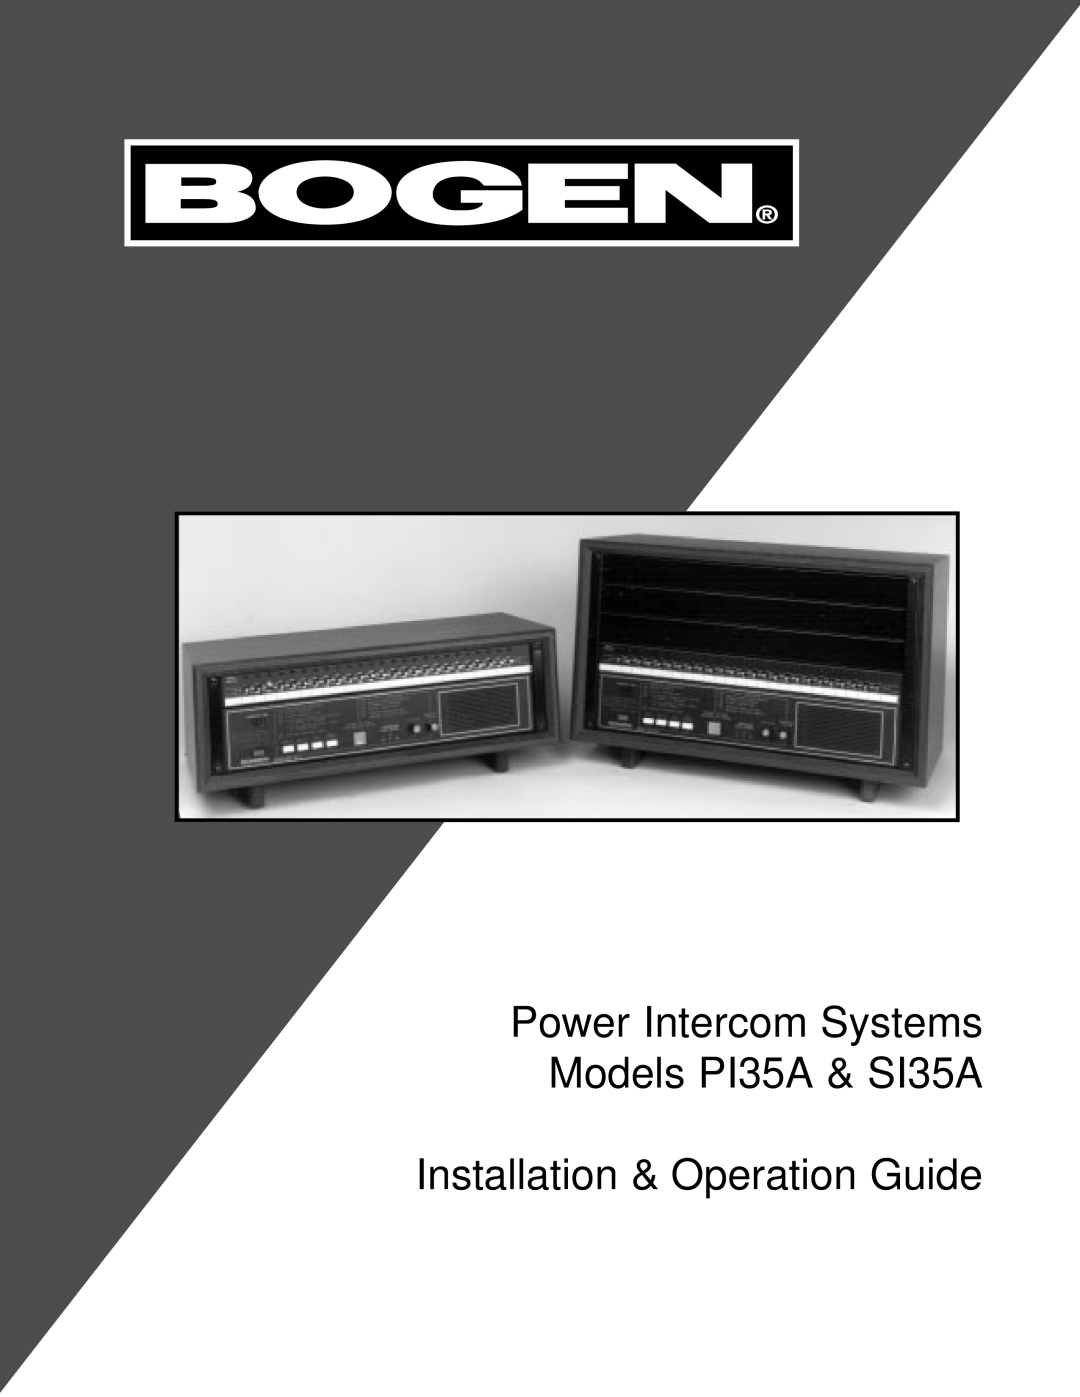 Bogen manual Power Intercom Systems Models PI35A & SI35A, Installation & Operation Guide 